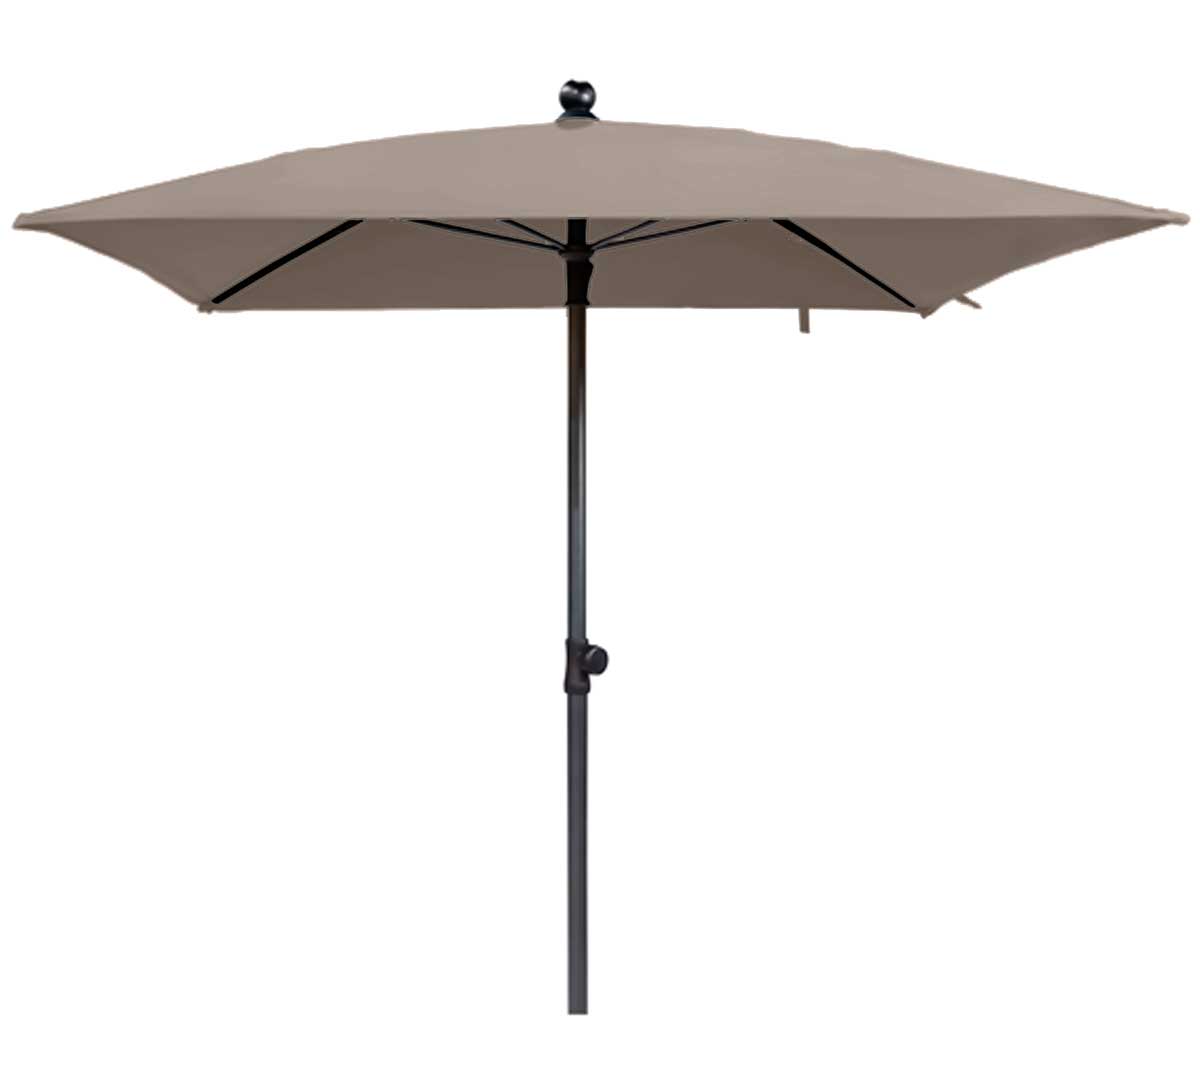 conva-parasol-urban-cu815-taupe-01